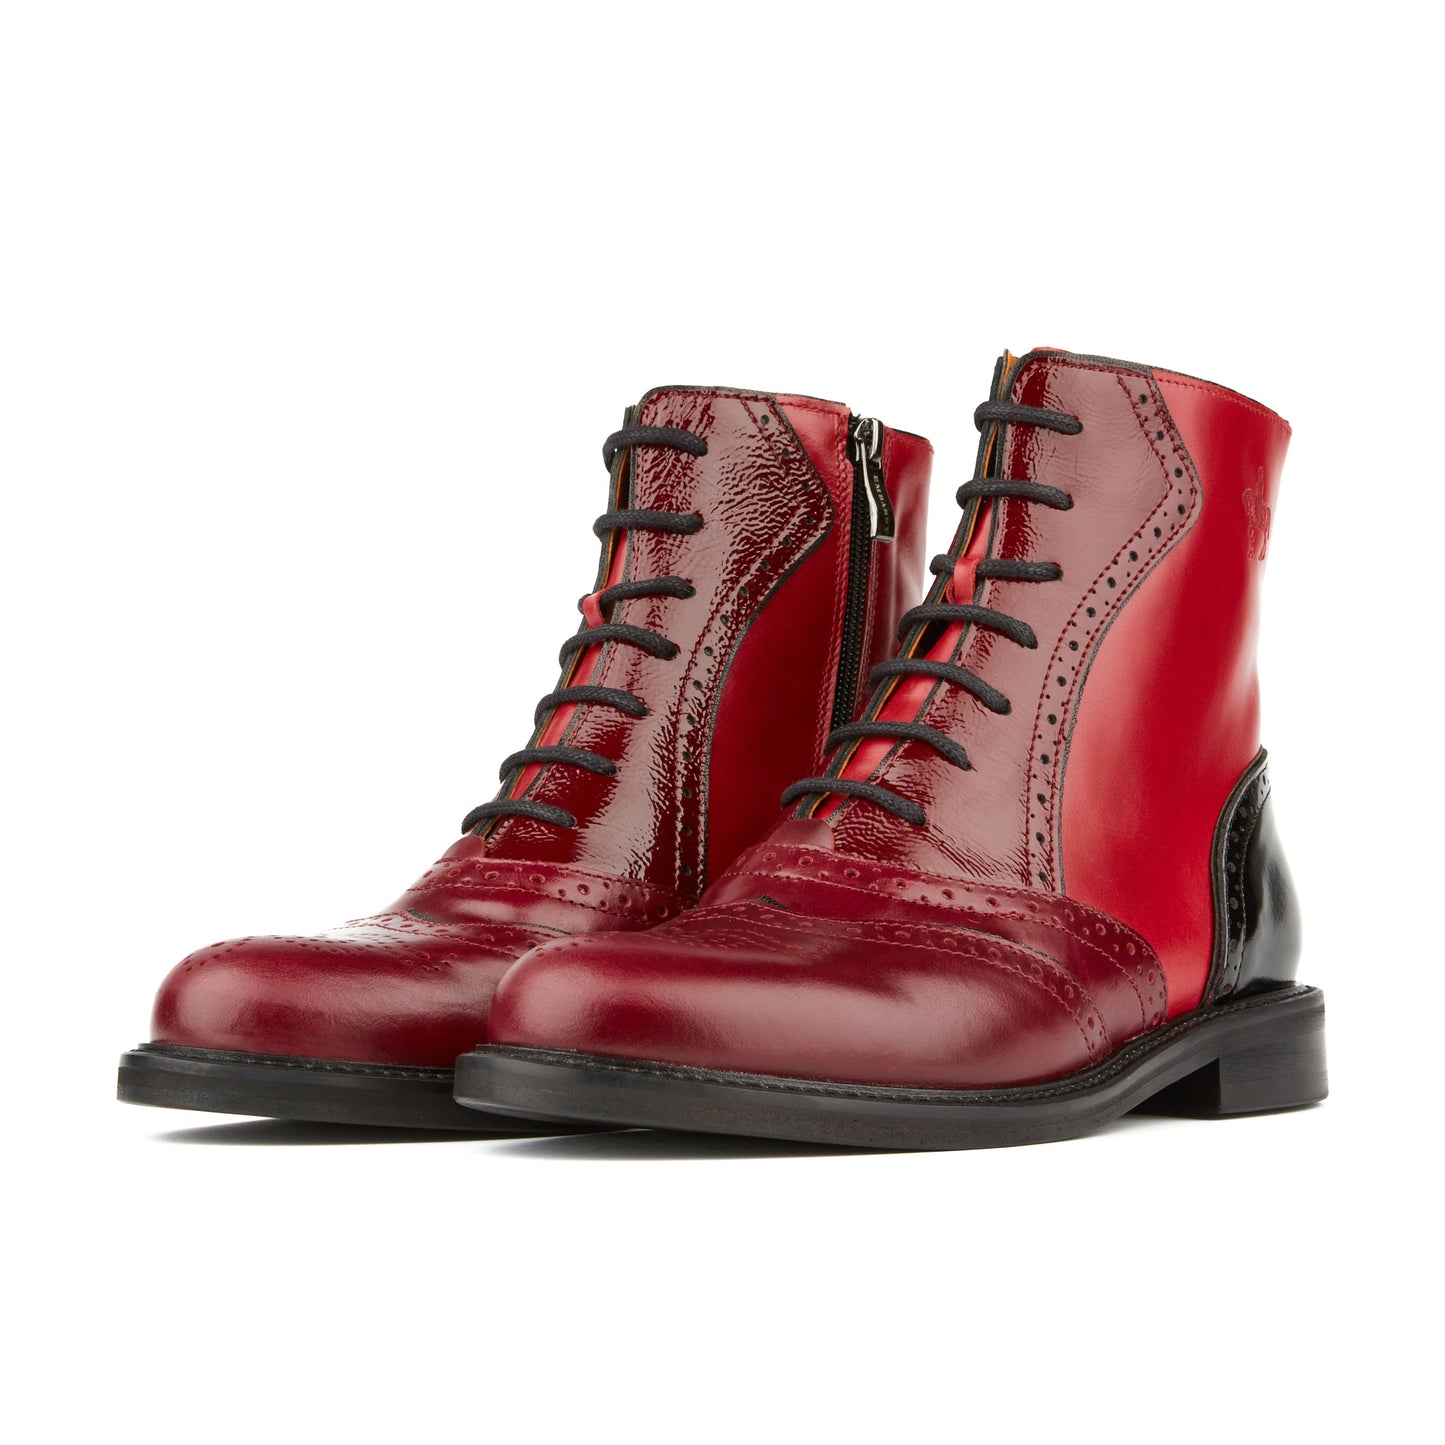 Brick Lane Boots - Red & Claret & Black